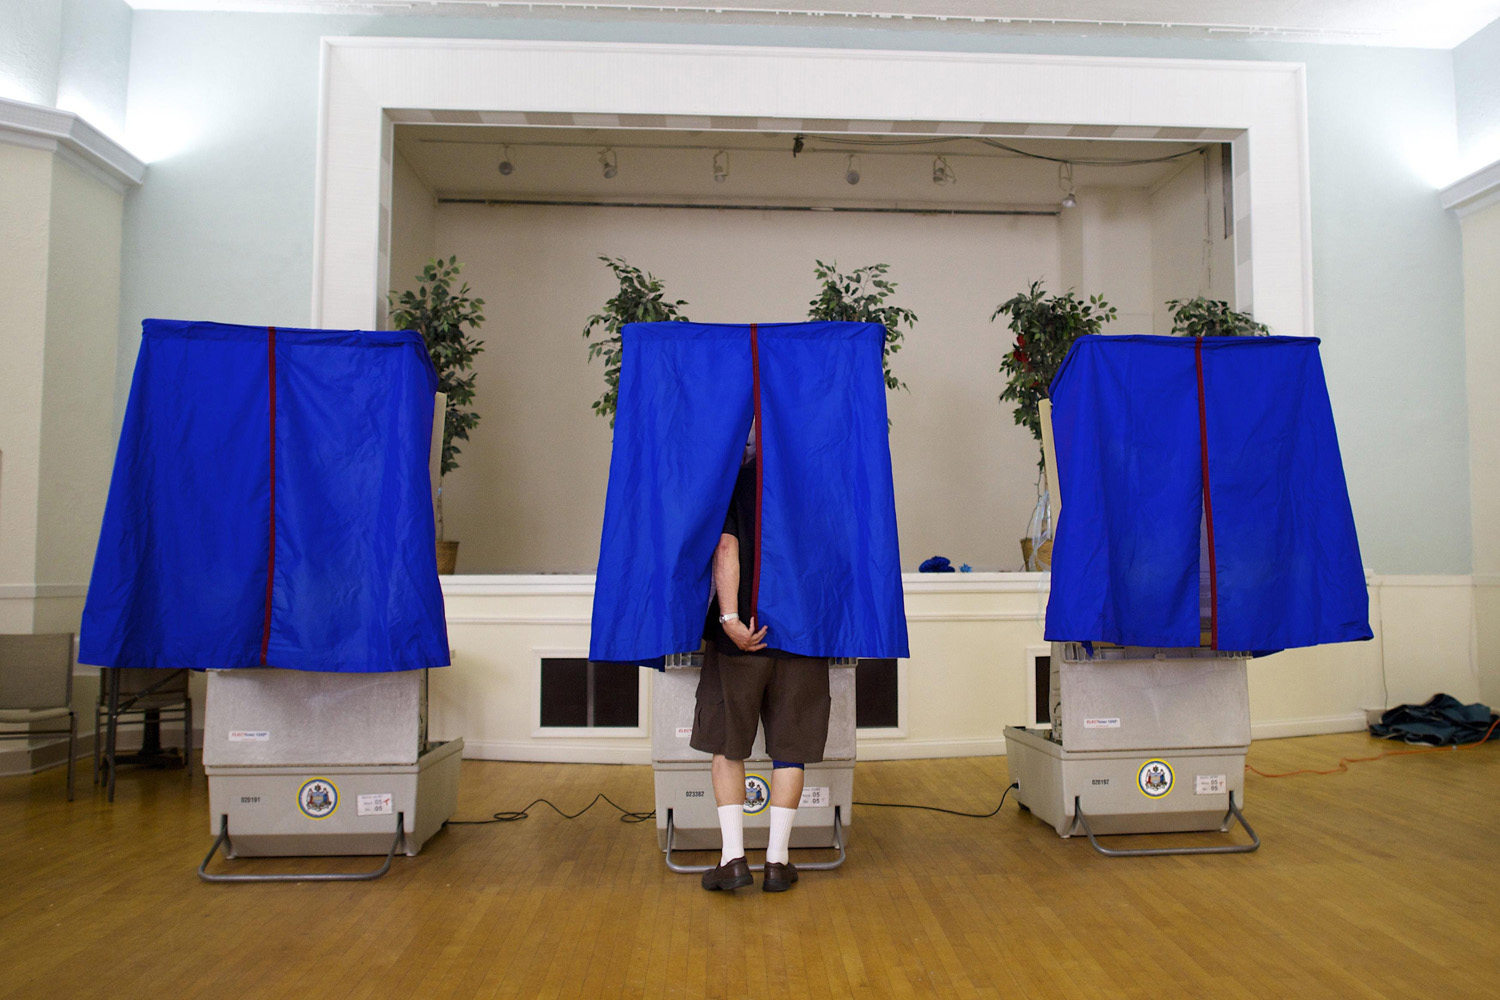 Frank Campanaro votes at the Greek Orthodox Church voting center on primary election day in Philadelphia